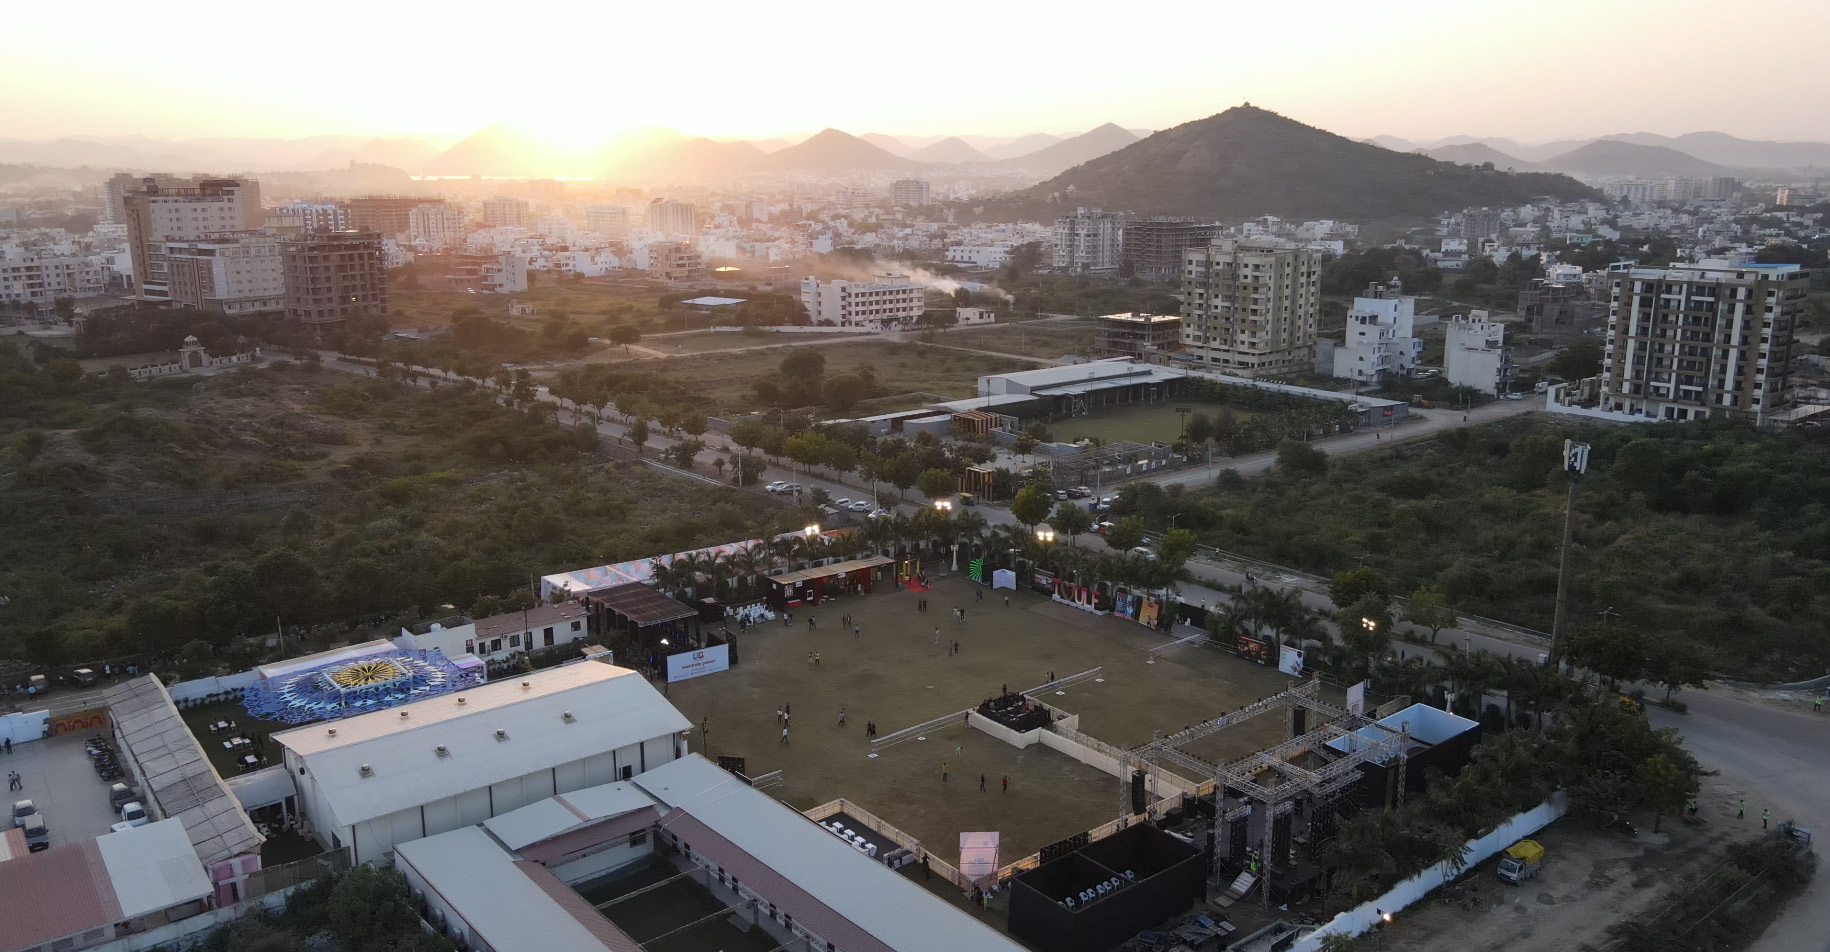 udaipur light festival 2022